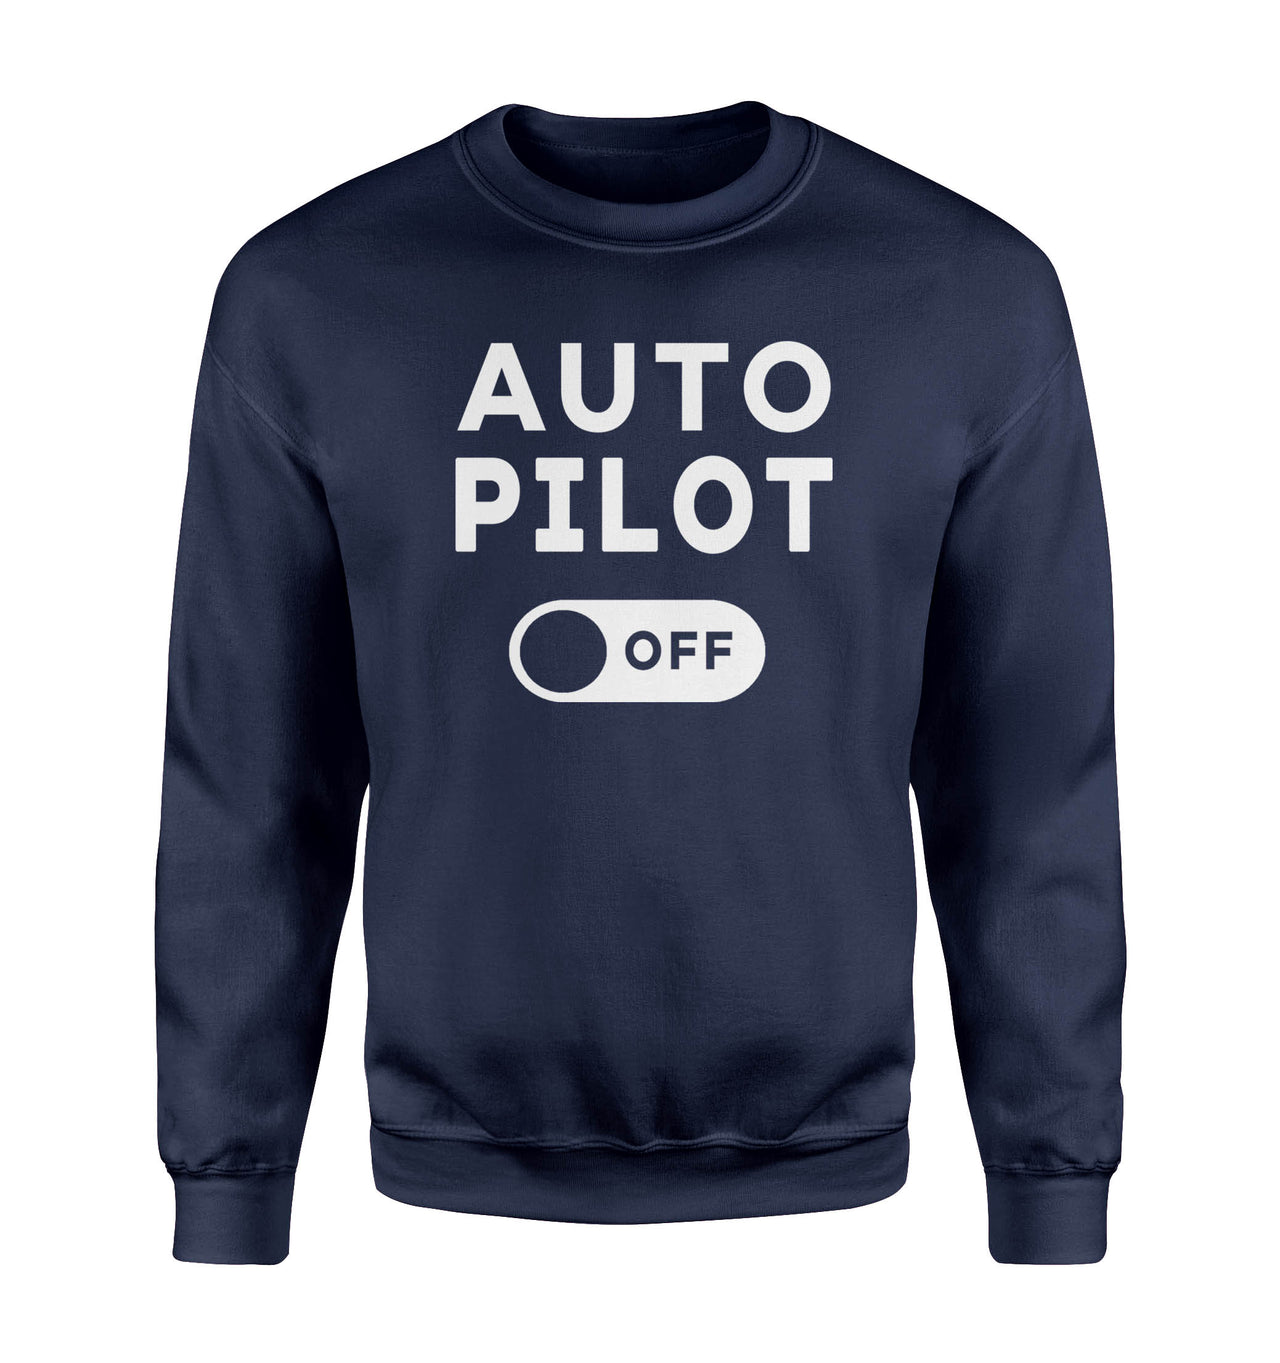 Auto Pilot OFF Designed Sweatshirts